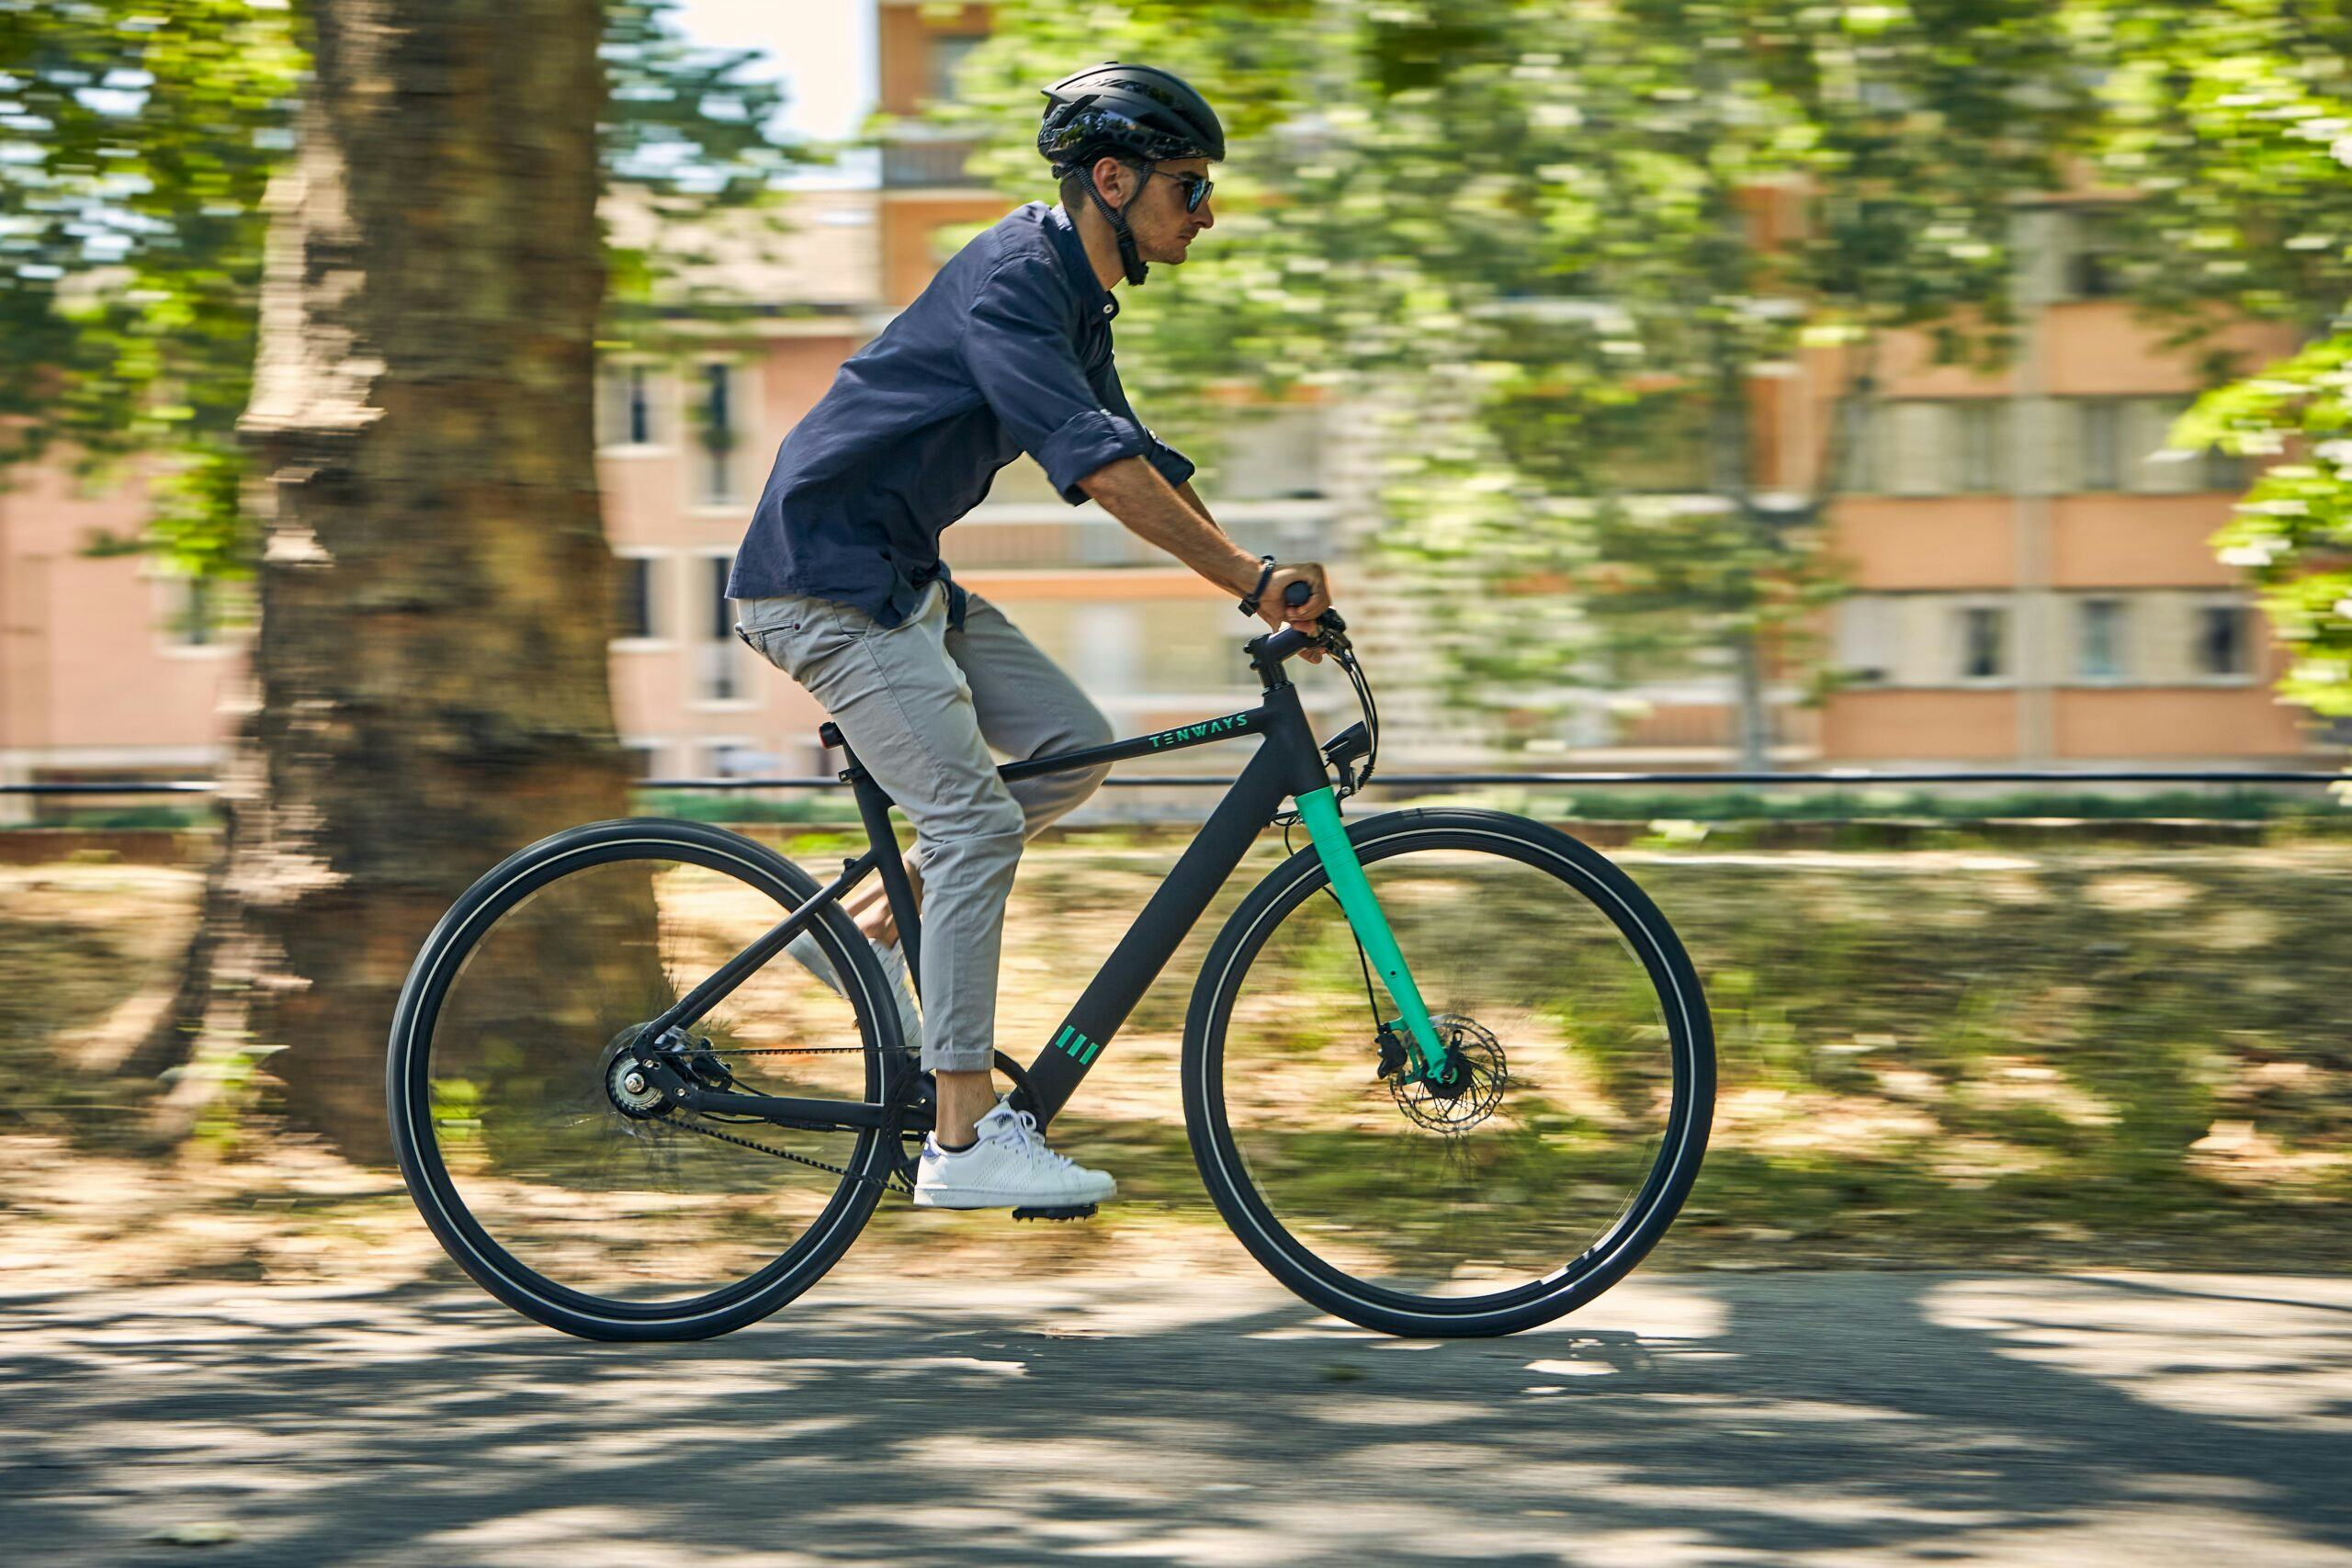 Tenways introduces CGO600 e-bike for an urban ride